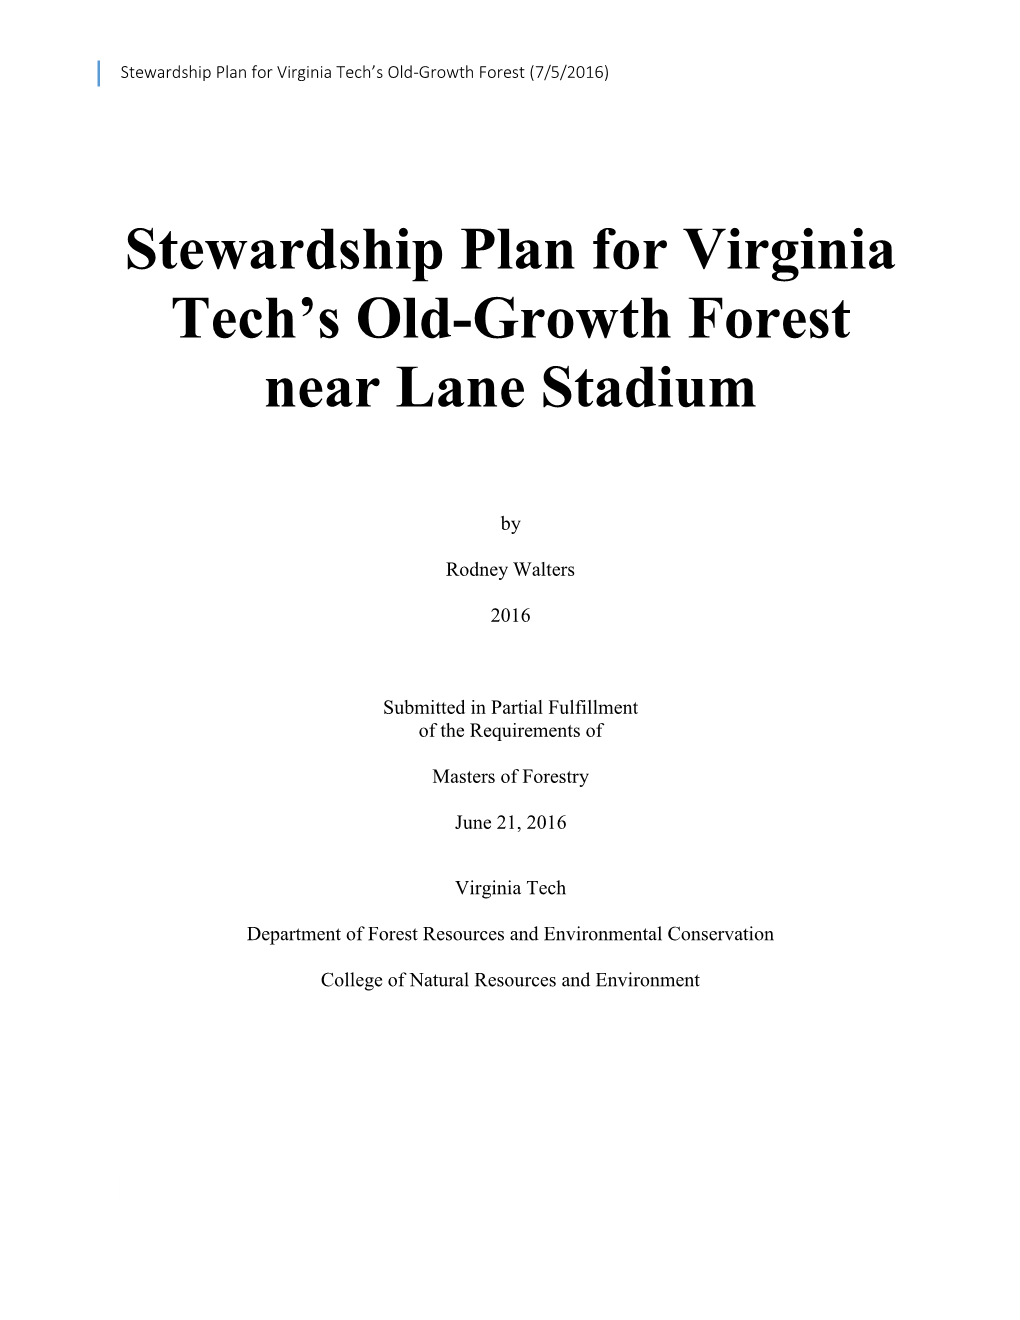 Stewardship Plan for Virginia Tech's Old-Growth Forest Near Lane Stadium